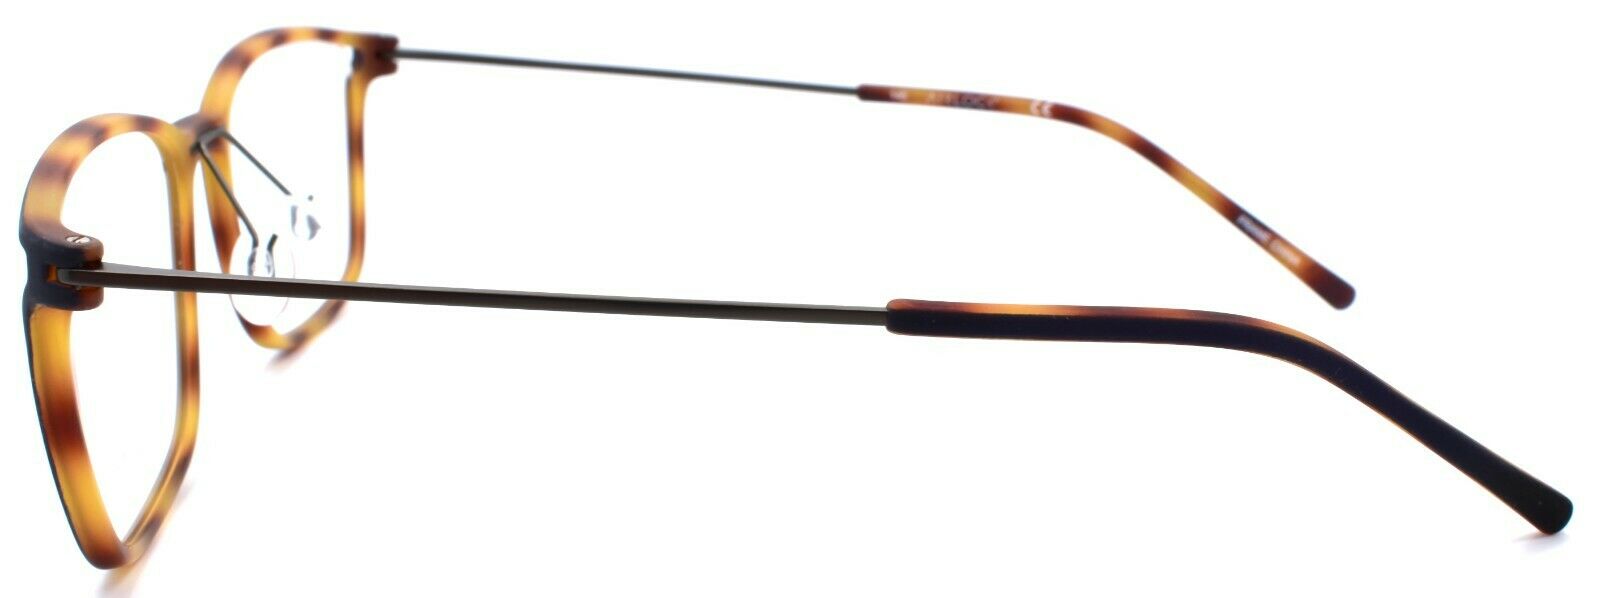 3-Marchon Airlock 2001 412 Men's Eyeglasses Frames 54-17-145 Matte Navy / Tortoise-886895394154-IKSpecs